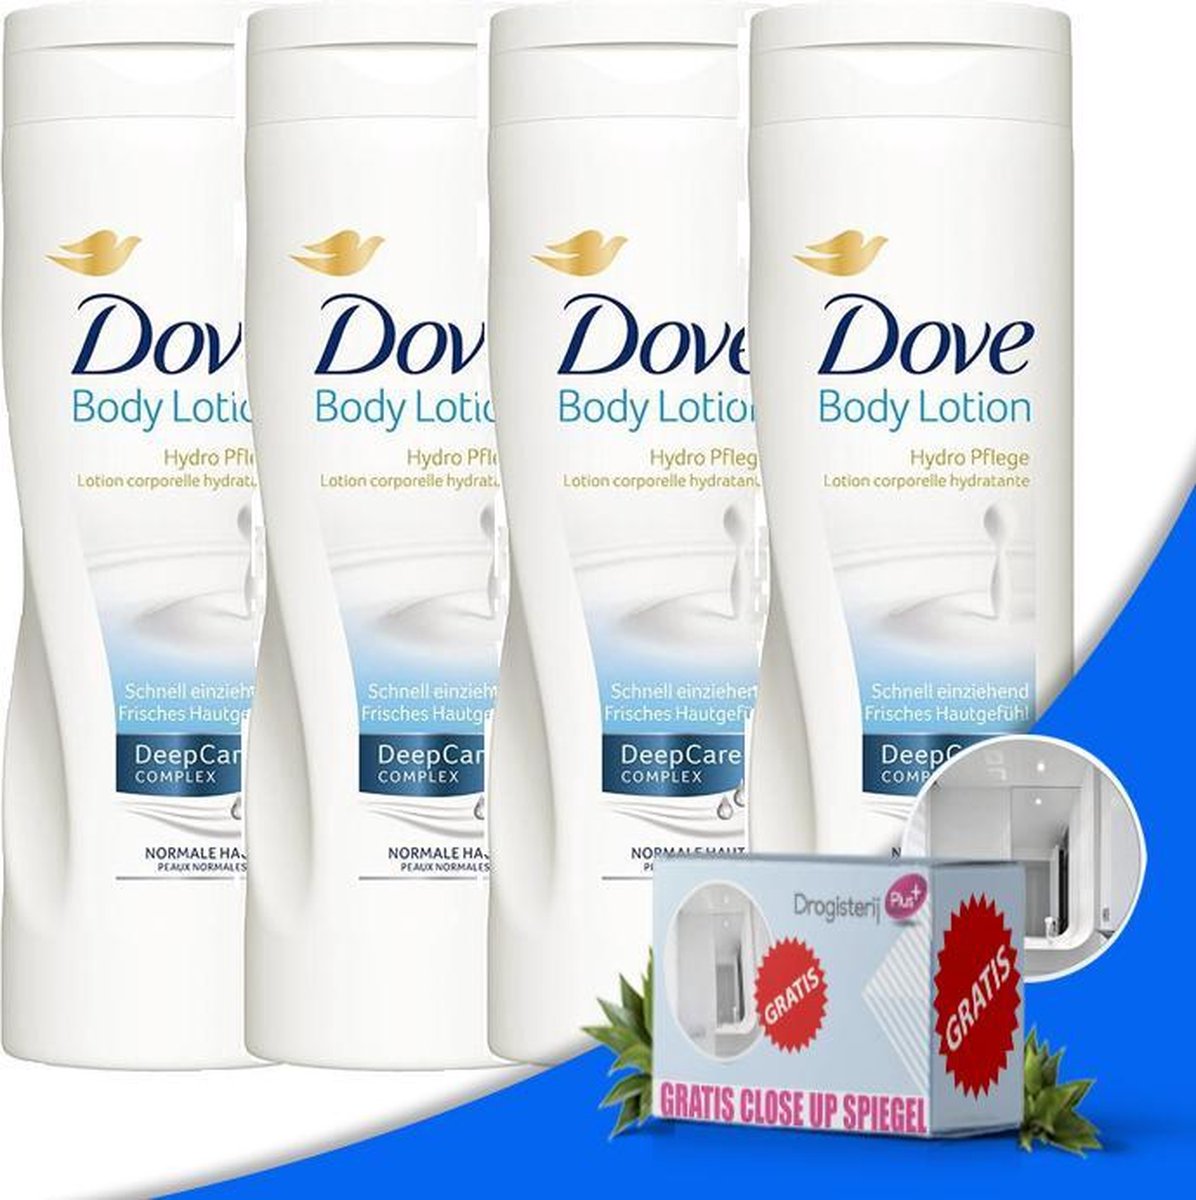 Dove Hydro Pflege Deepcare Complex Body lotion - 4X 400ml + Make-Up Spiegel  | bol.com